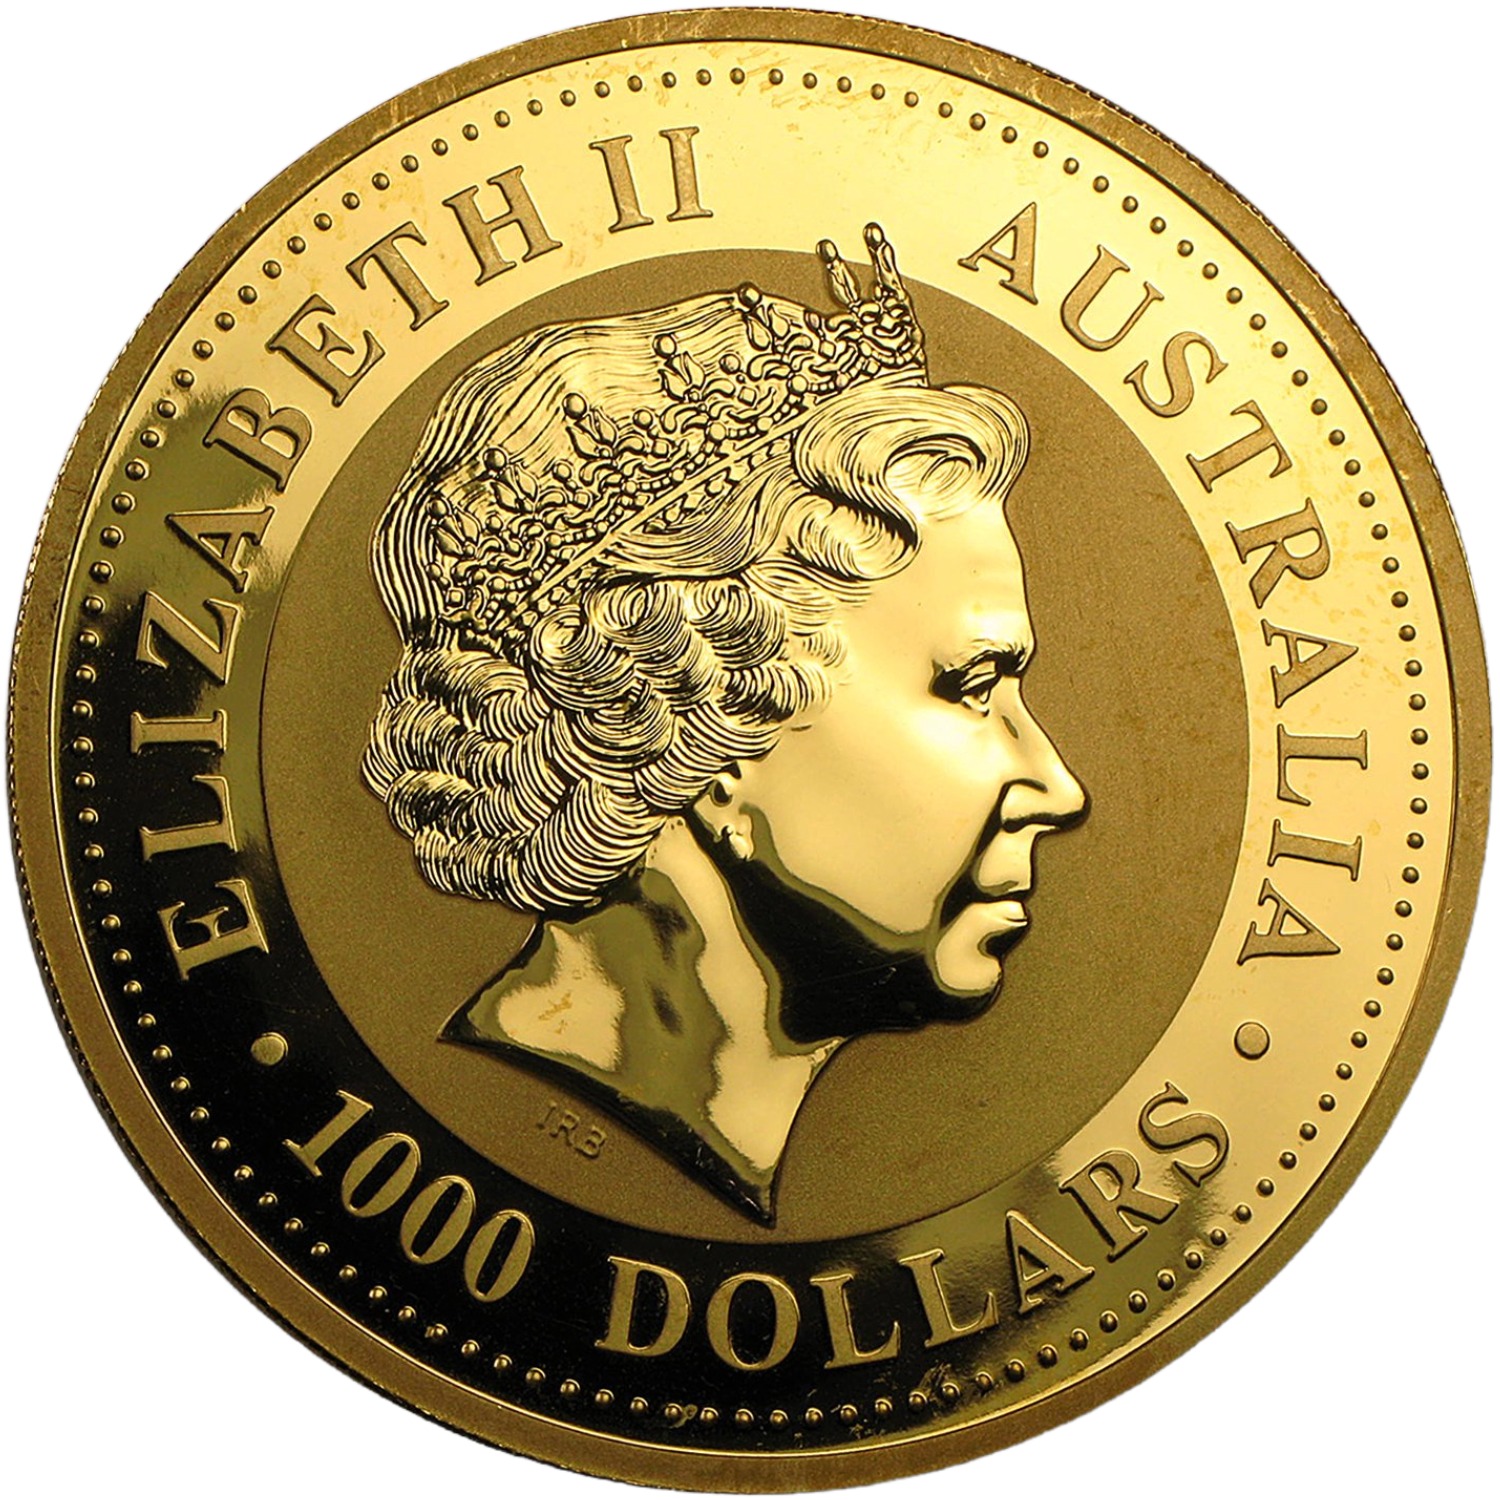 2005 - 10 oz. Australian Gold Lunar Bullion Coin - Year of the Dragon - Series I - Obverse side